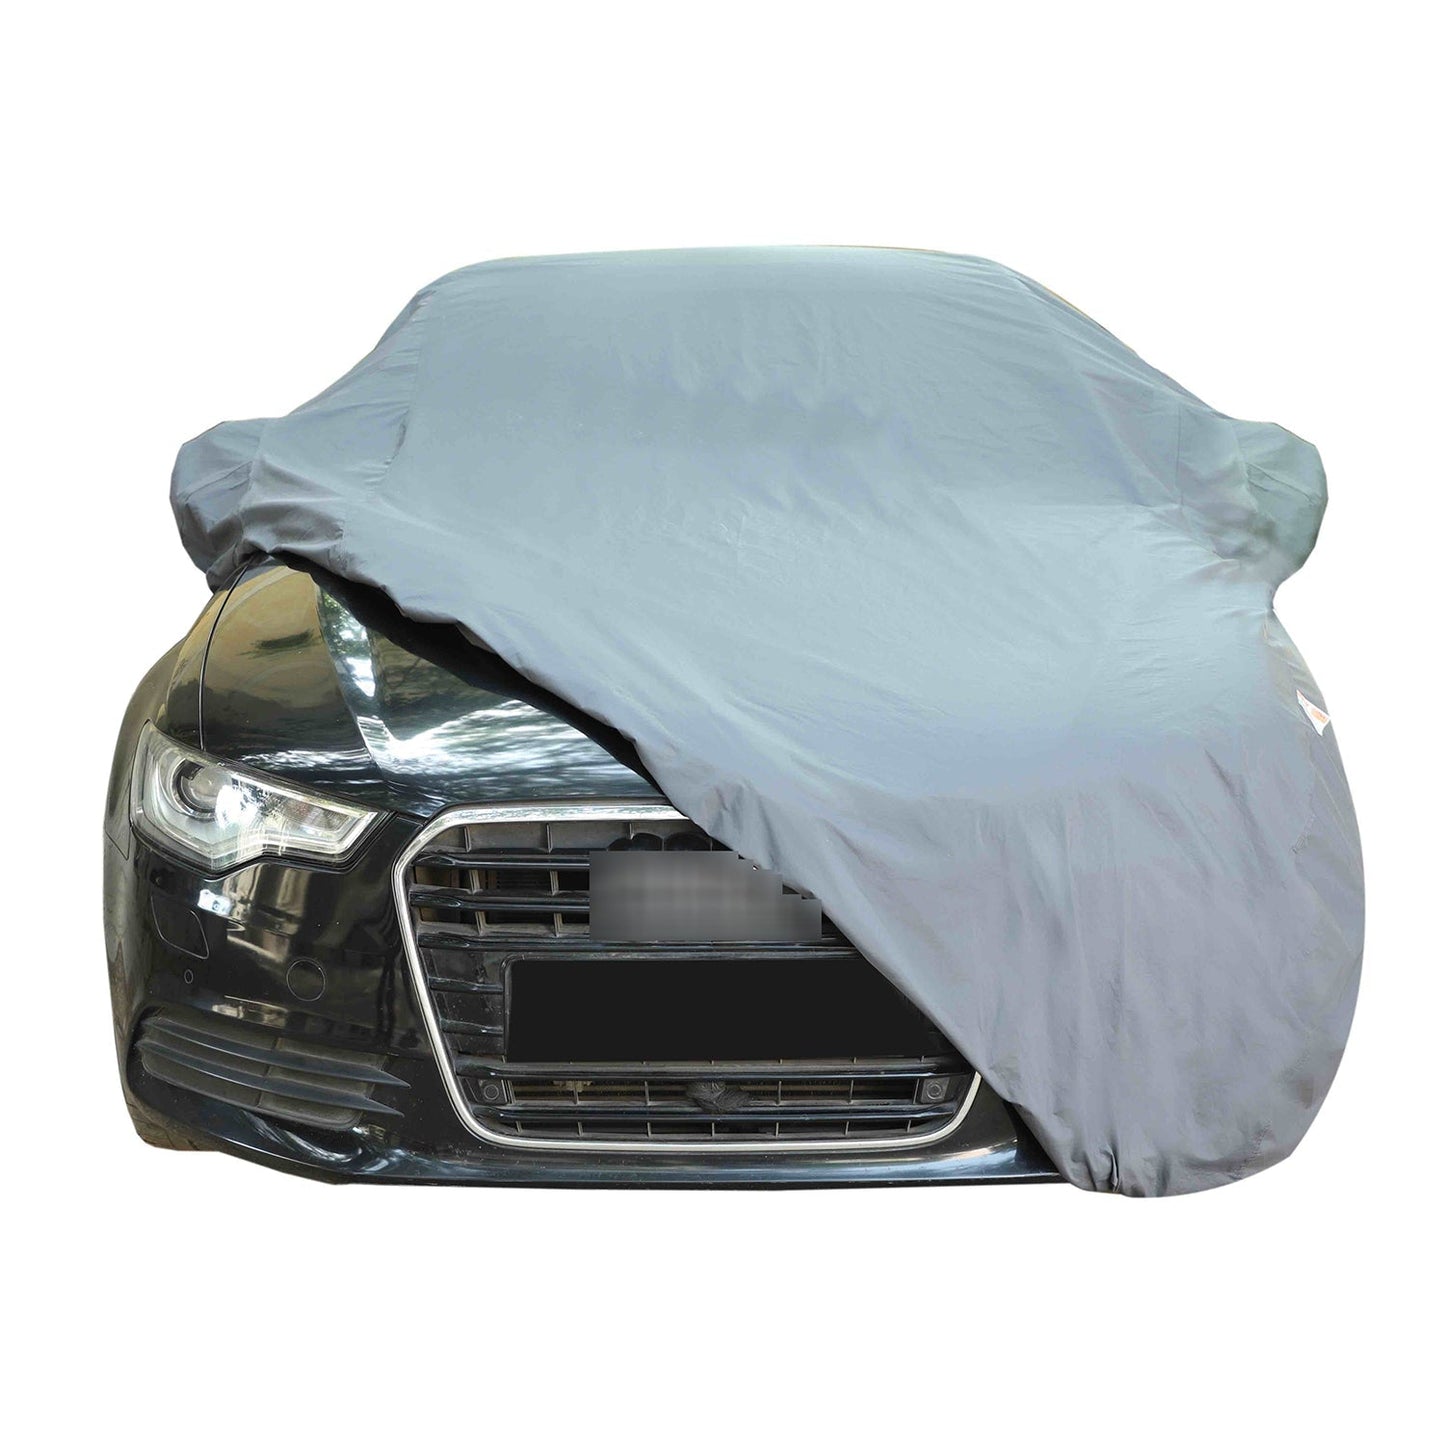 Oshotto Dark Grey 100% Anti Reflective, dustproof and Water Proof Grey Car Body Cover with Mirror Pockets For Toyota Innova Hycross (Dark Grey)